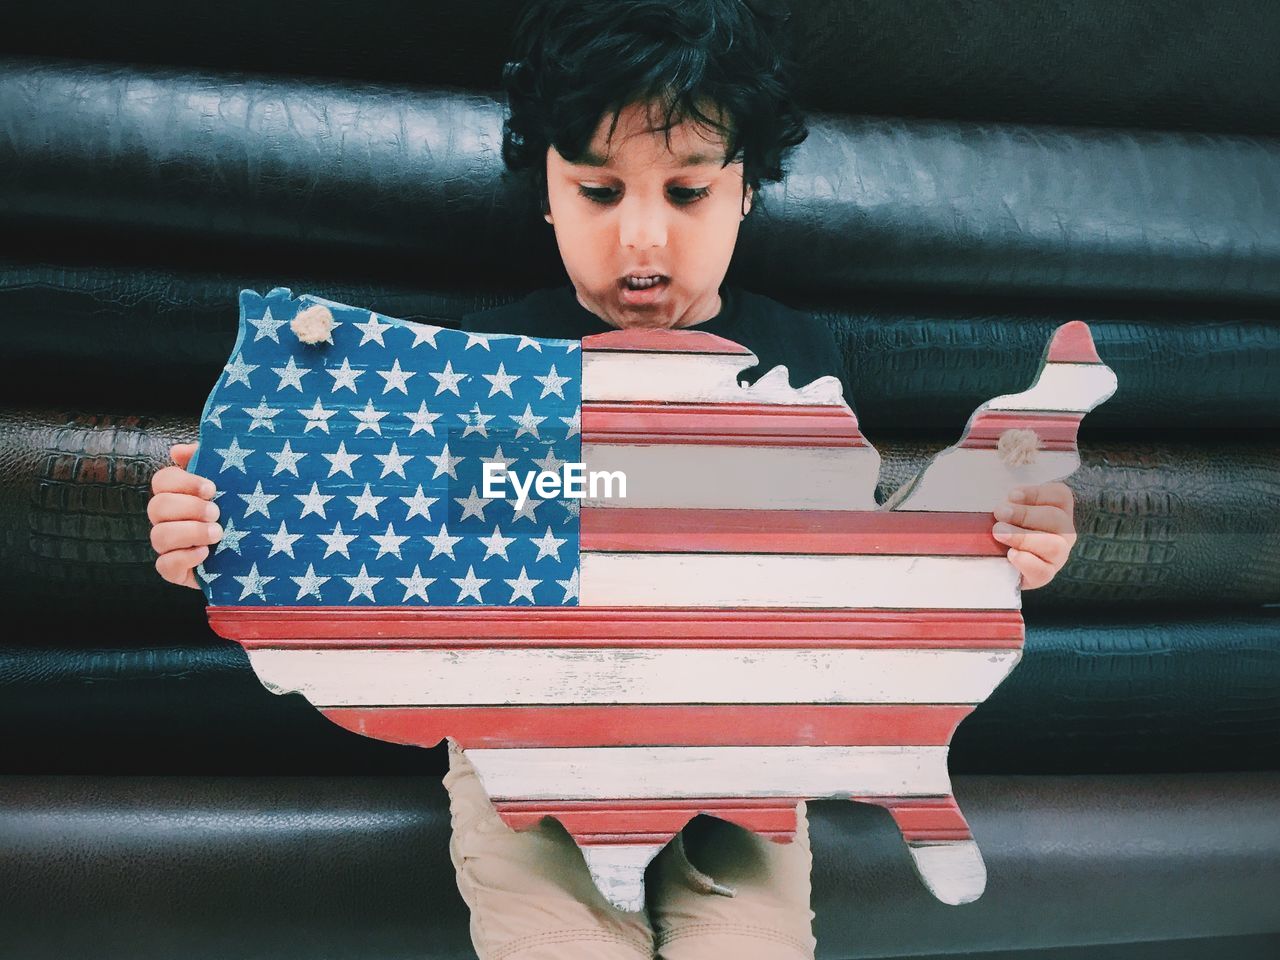 Boy holding american flag map